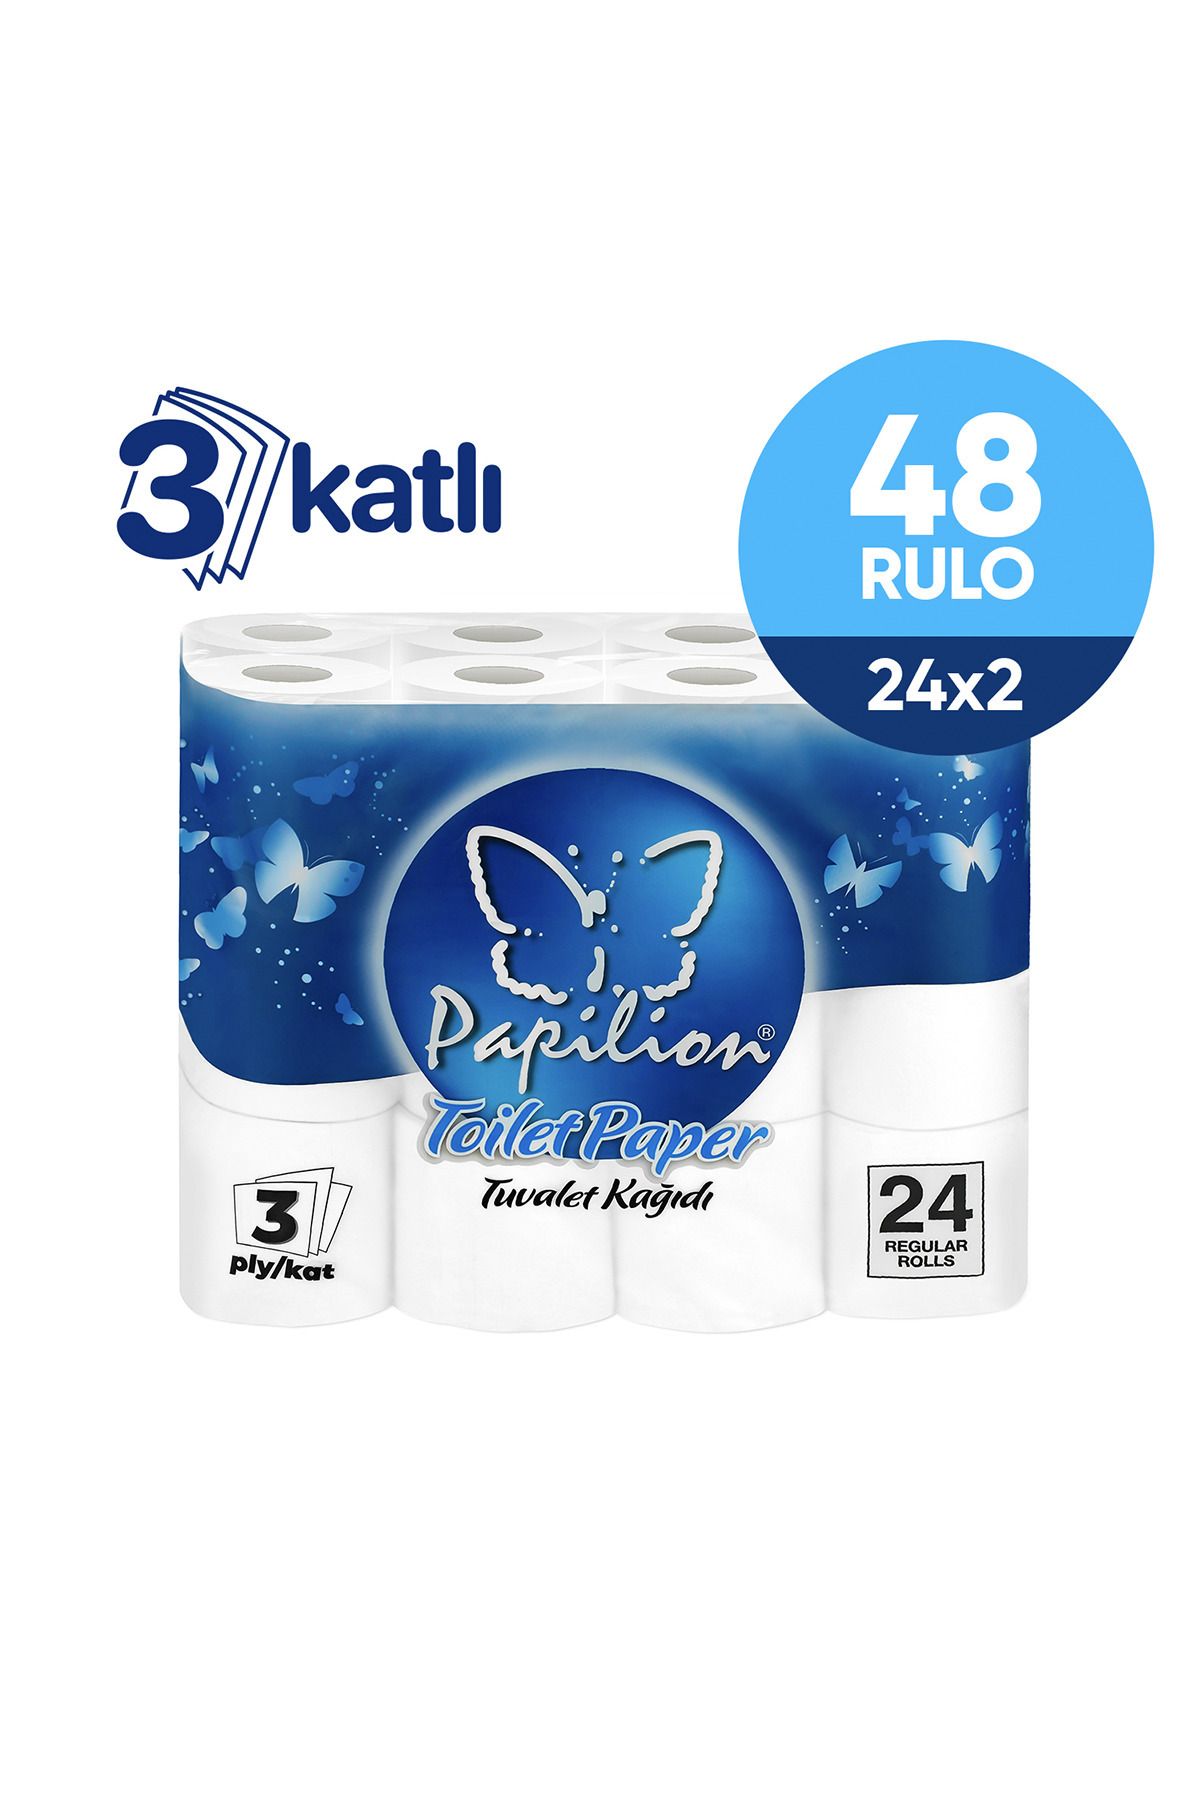 Papilion Extra-soft 3 Katlı Tuvalet Kağıdı 24x2 - 48 Rulo